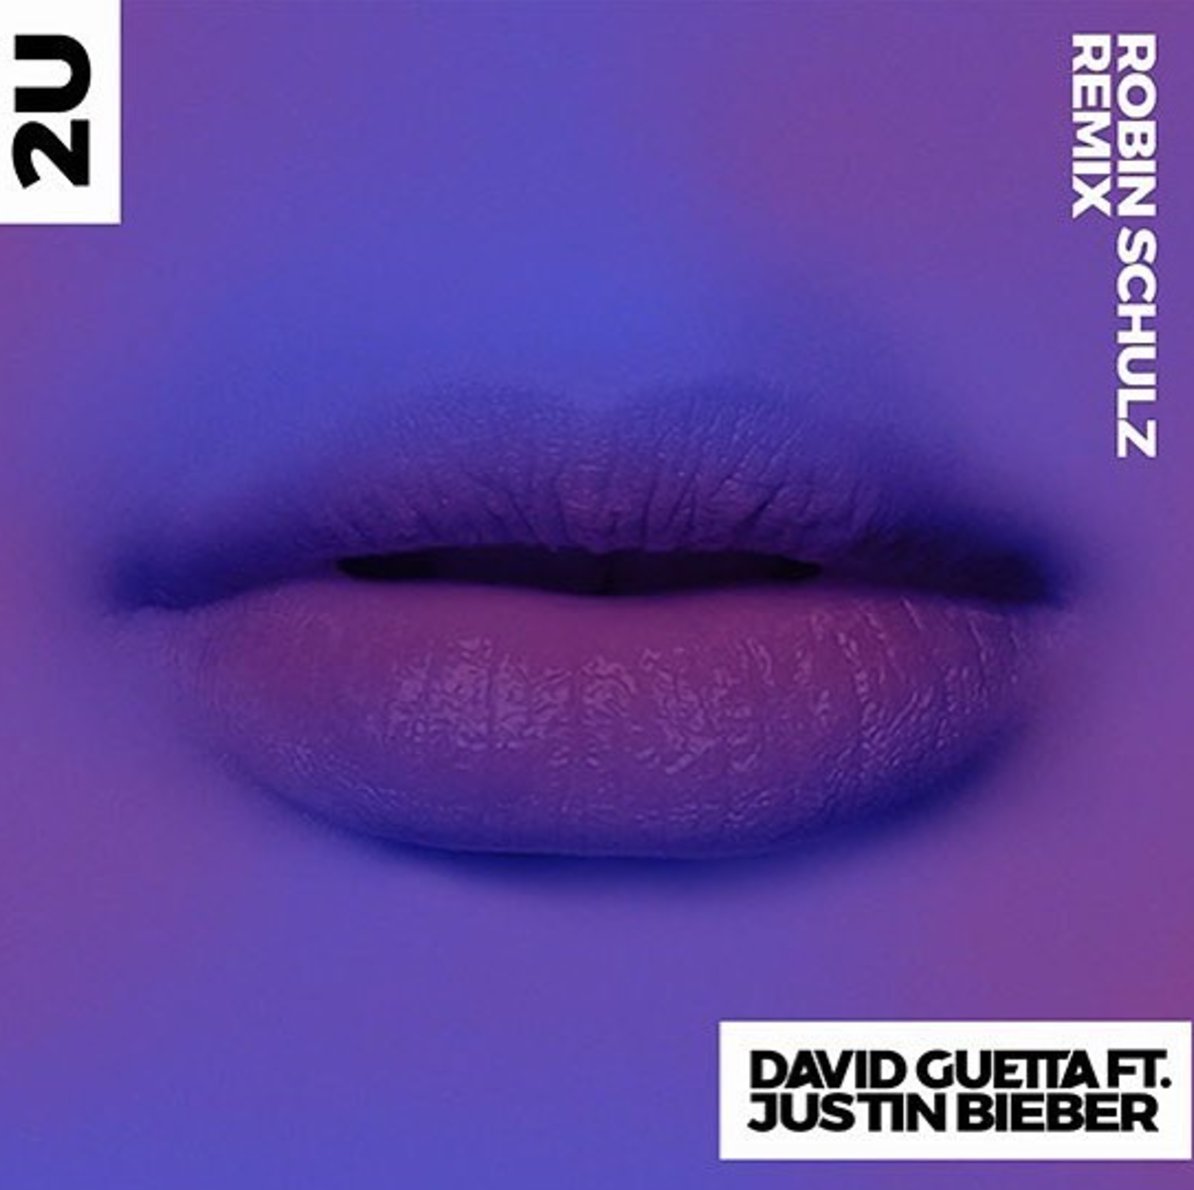 RT @robin_schulz: #ICYMI My remix of #2U by @DavidGuetta ft. @justinbieber is out. ▶ https://t.co/HxdeJaztJV https://t.co/qDspJKnitE